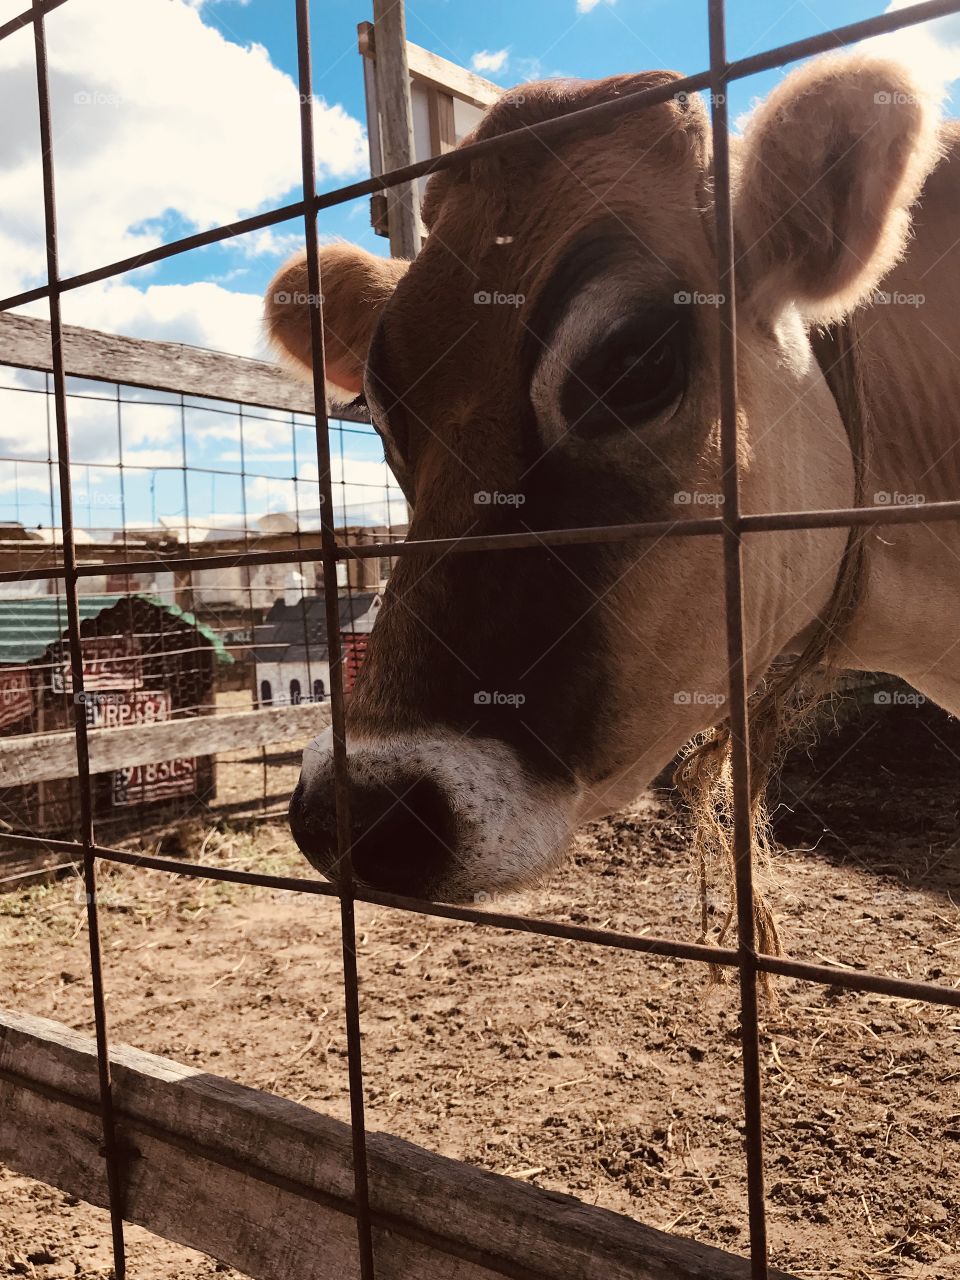 Closeup of a cow at a petting farm